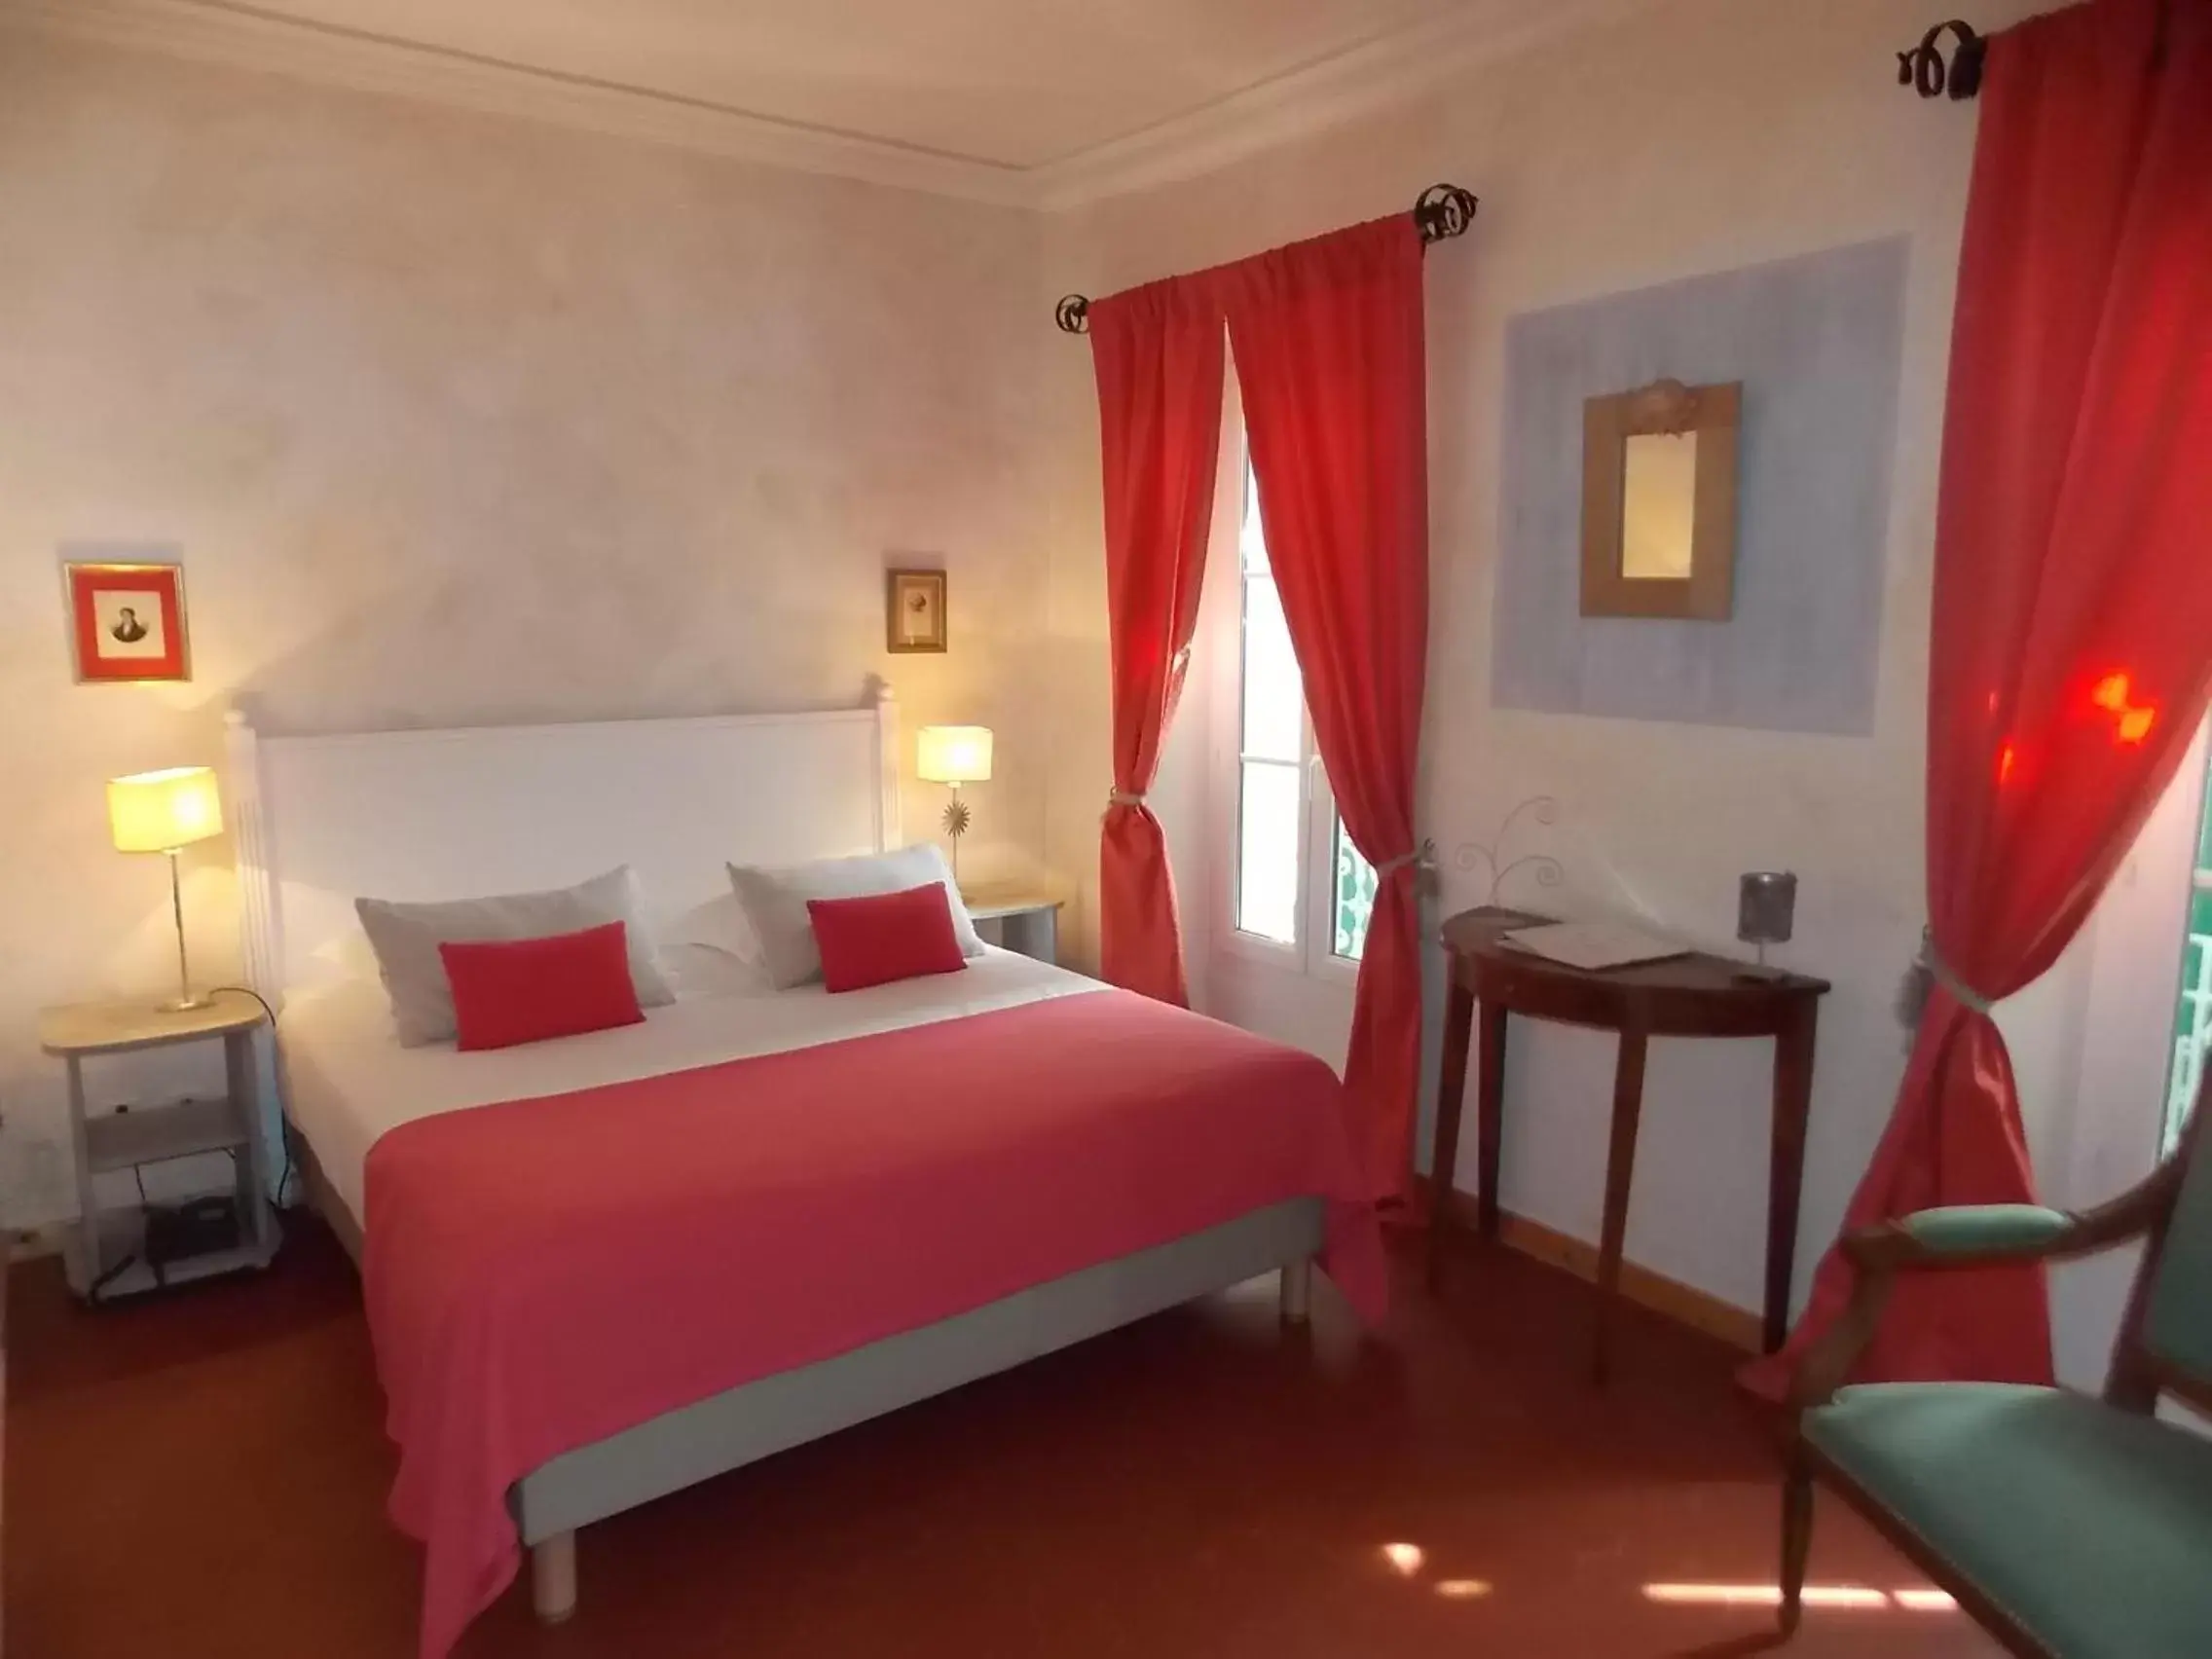 Bed, Room Photo in Hôtel & SPA Ventoux Provence "Domaine des Tilleuls"